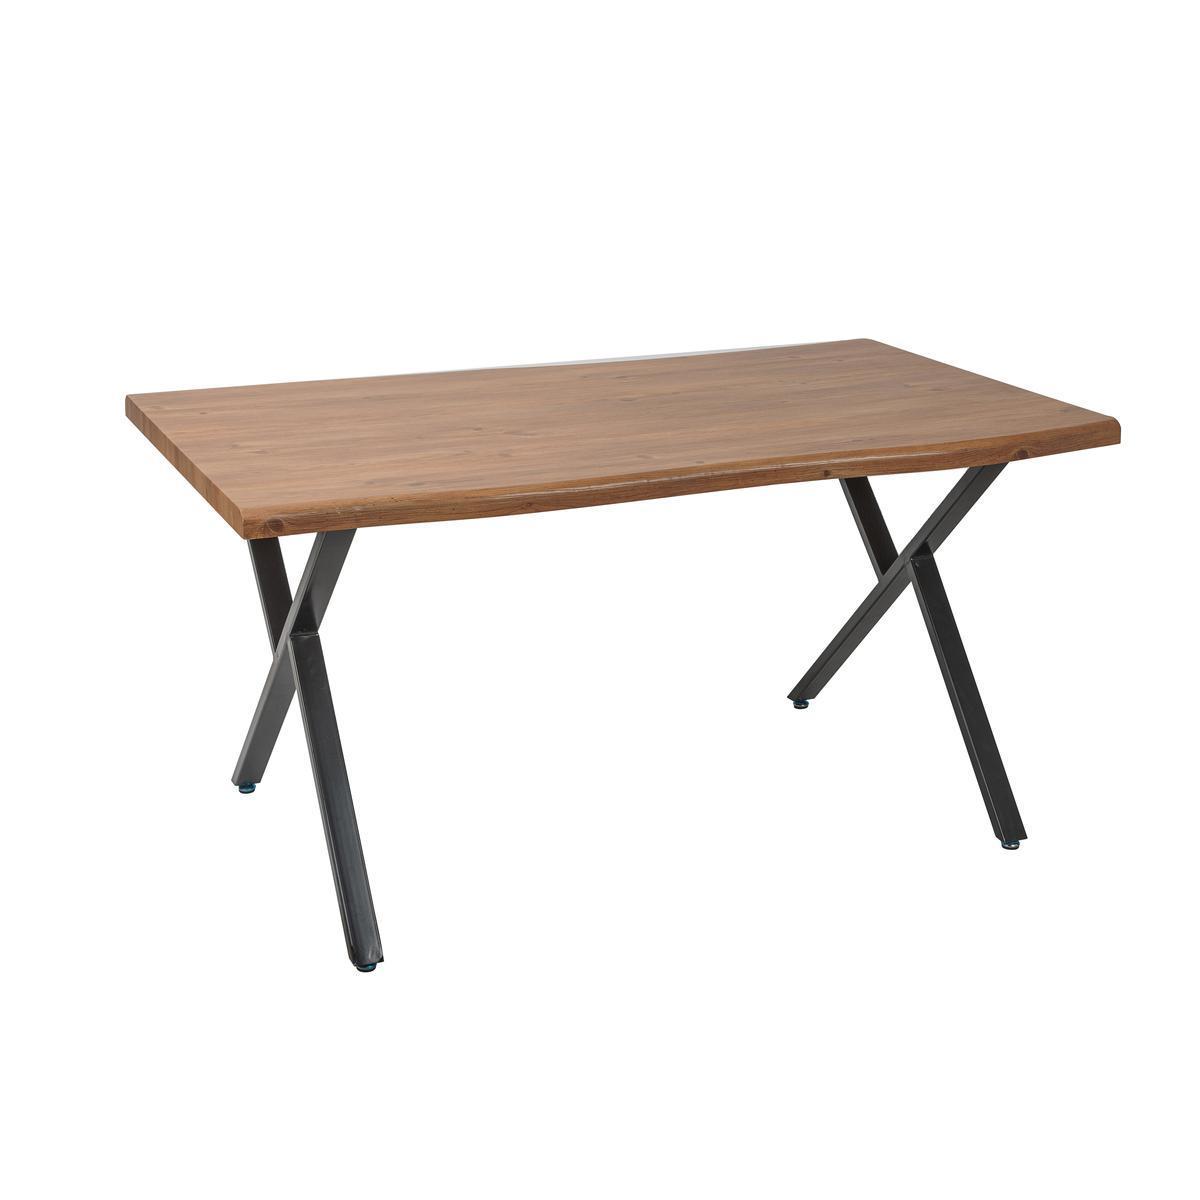 Table Chicago - 90 x L 150 x H 75 cm - K.KOON